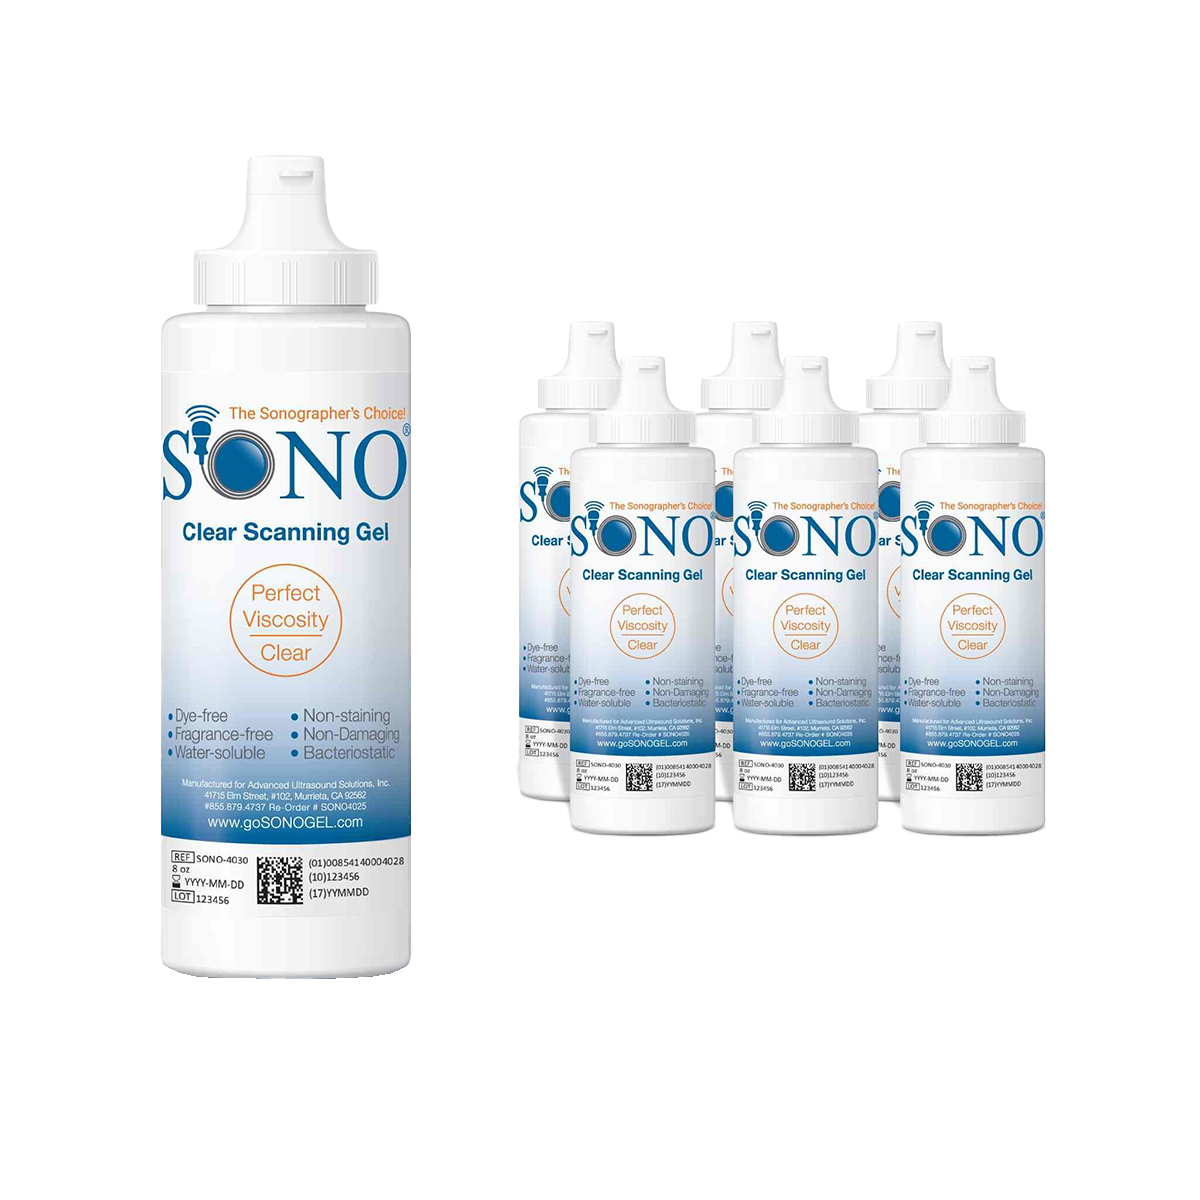 SONO Clear Ultrasound Scanning Gel - 6 Pack of 8 oz Bottles - High Viscosity for Enhanced Ultrasound Performance